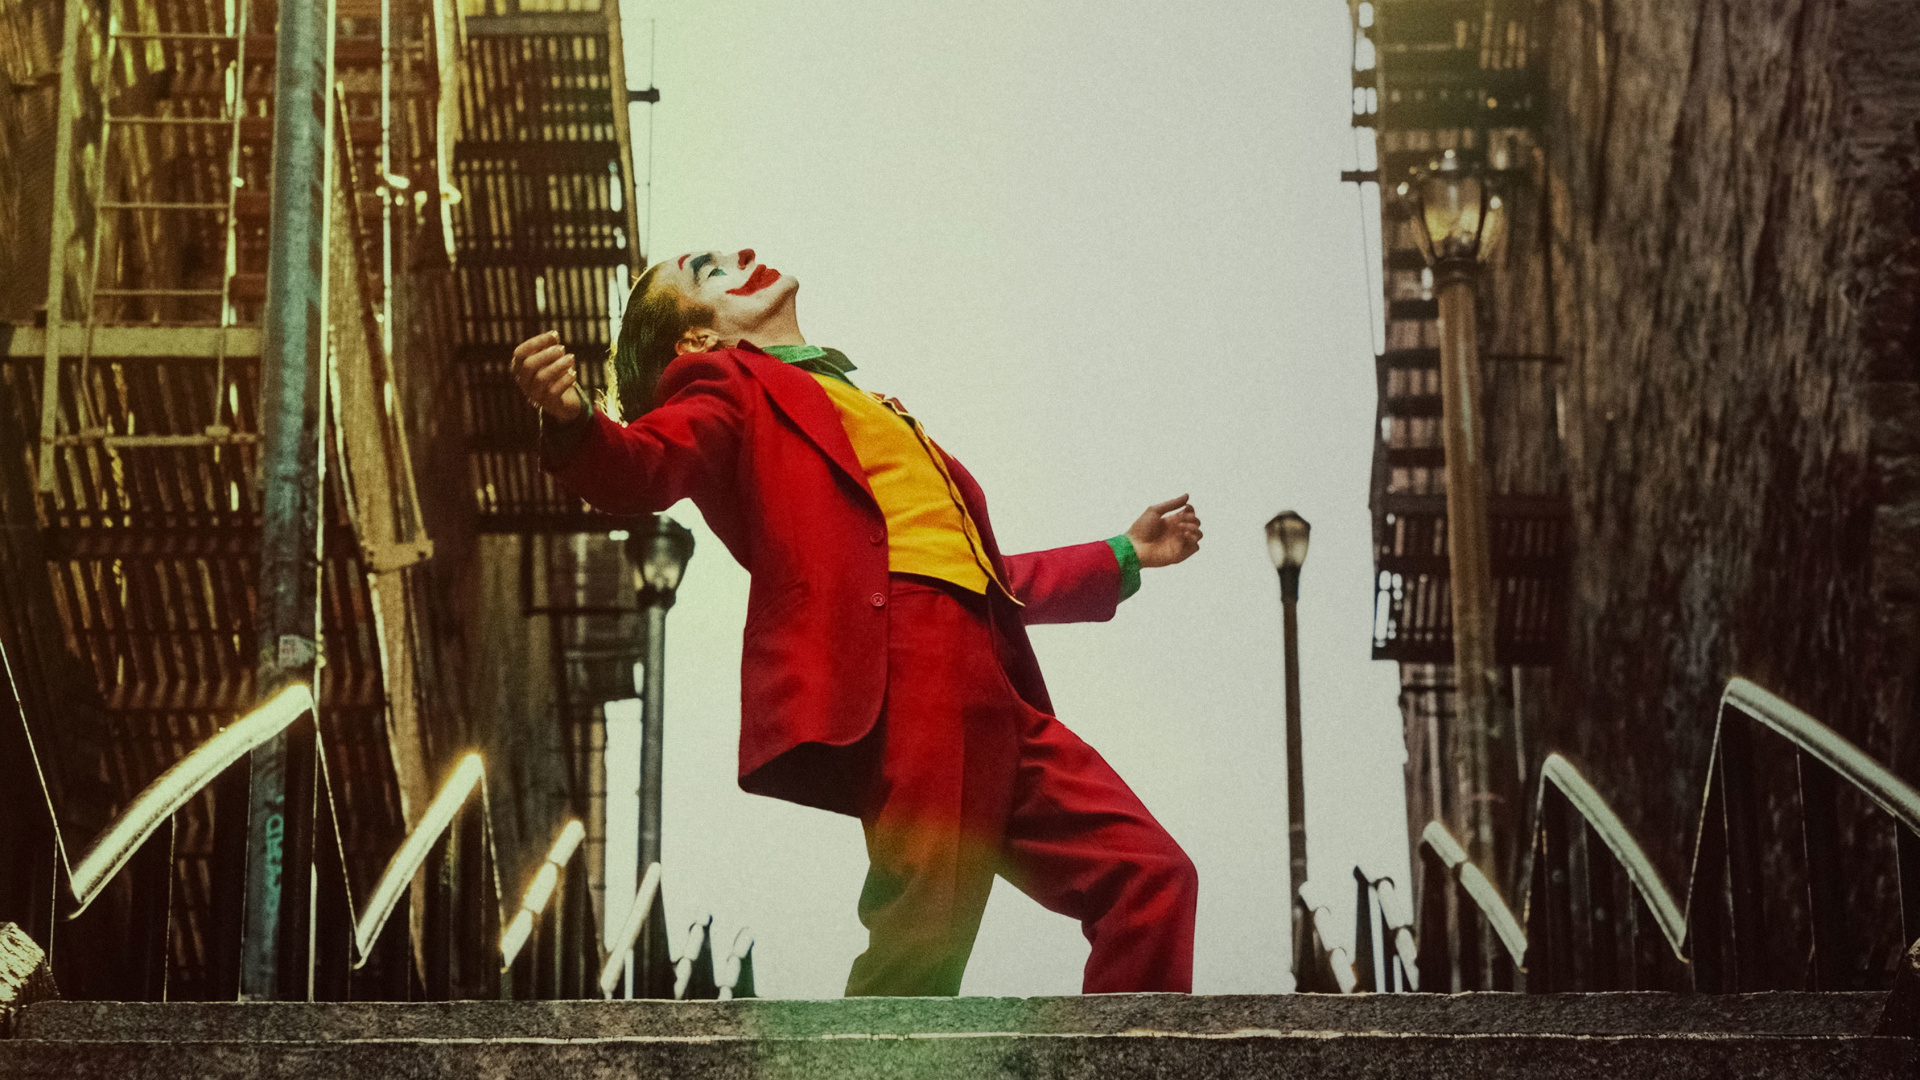 Joker Movie Poster Wallpaper Full HD